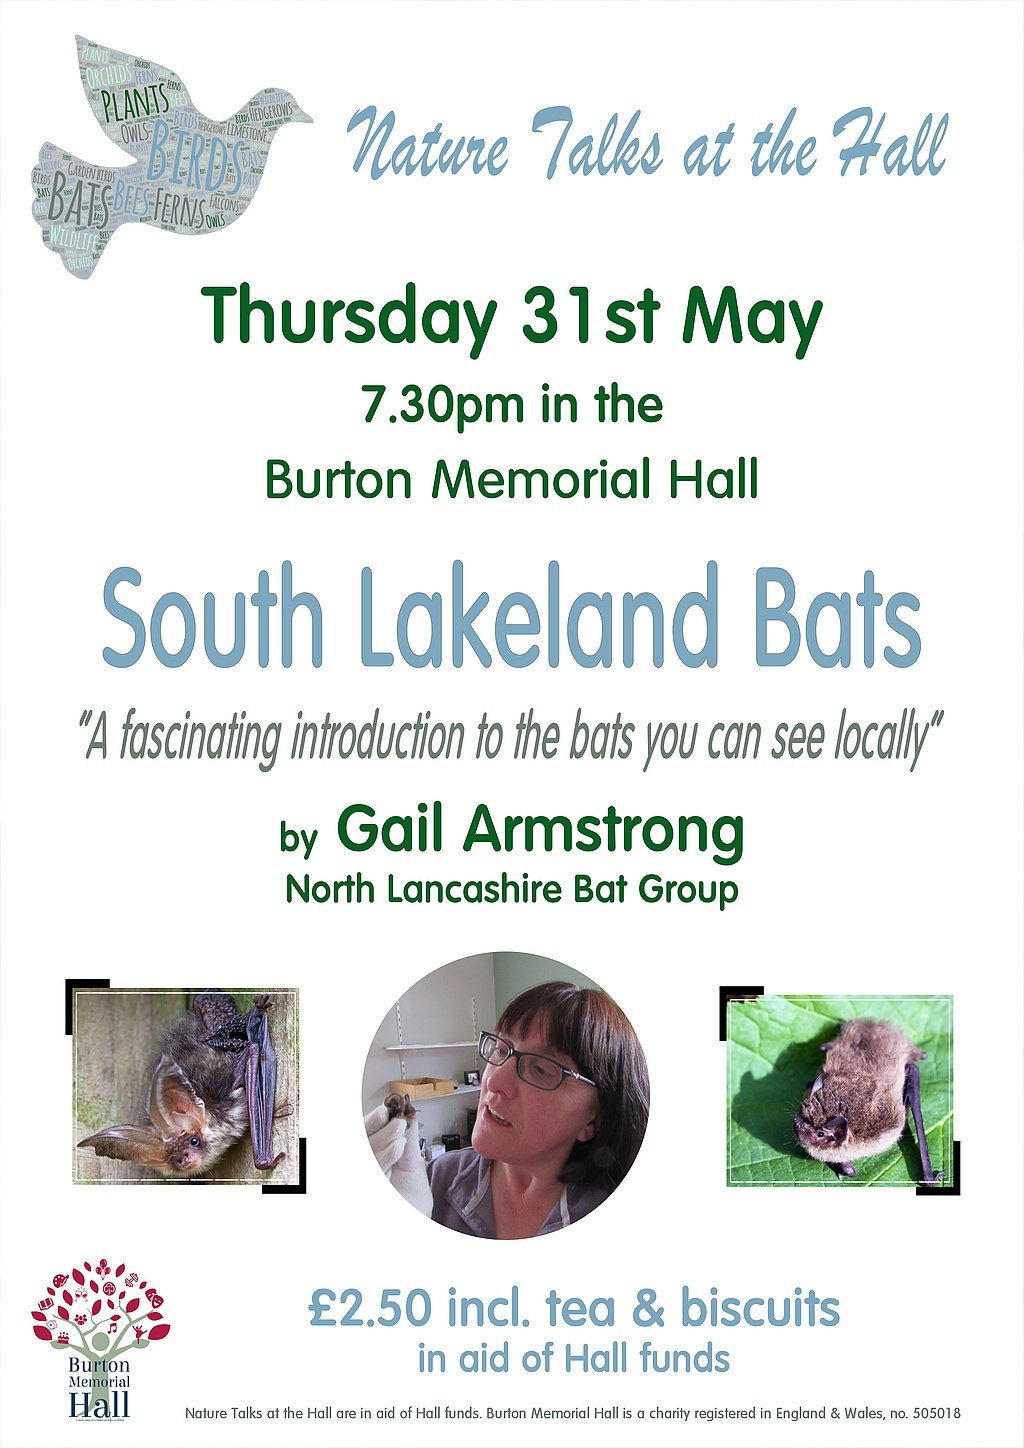 South Lakeland Bats